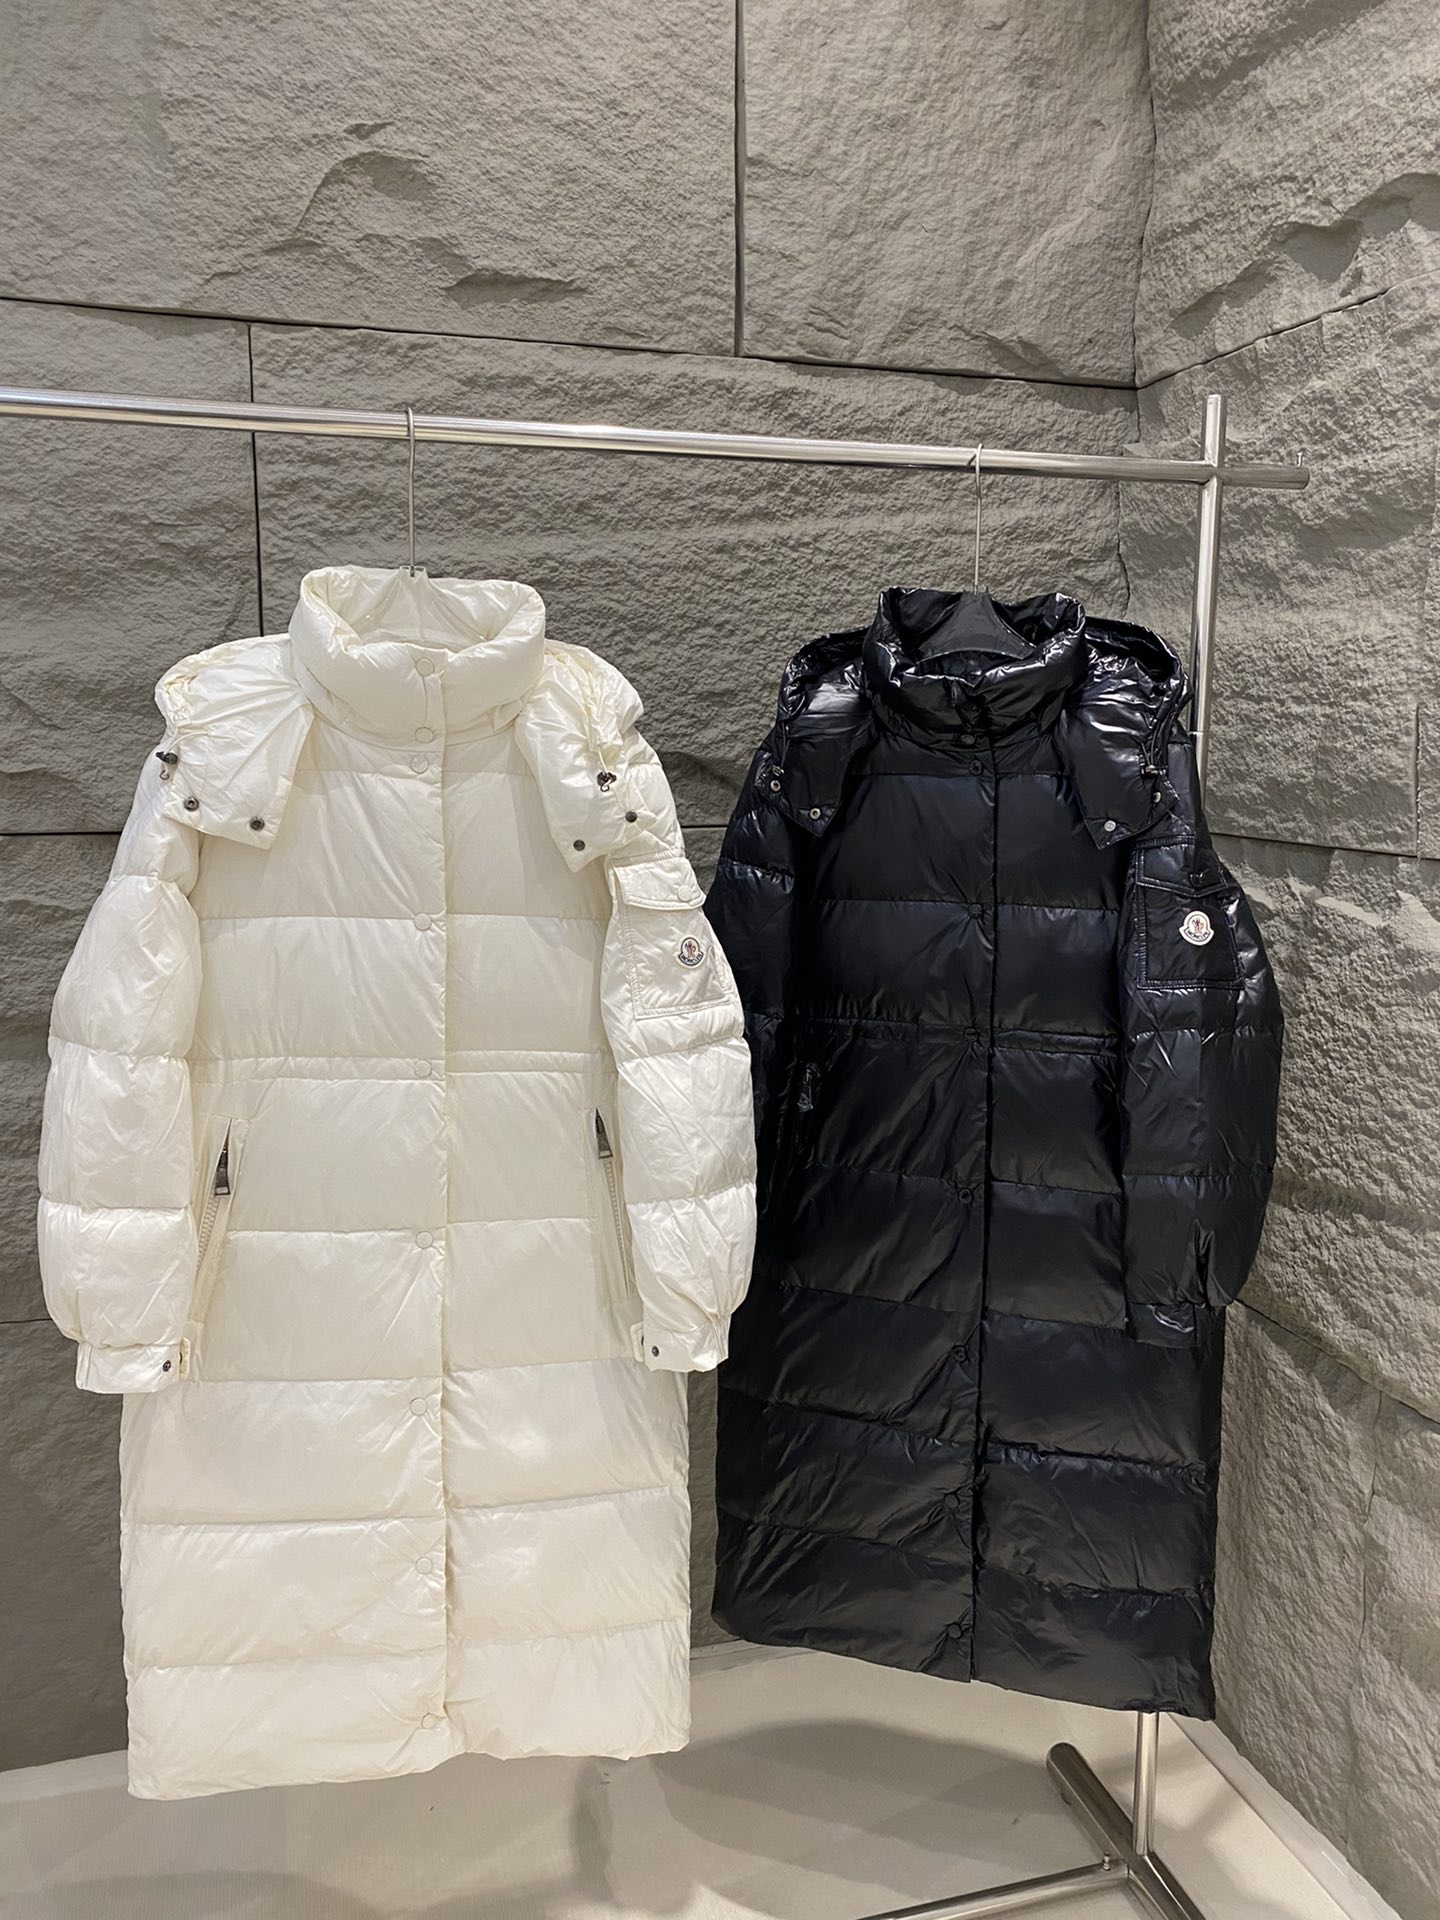 PwwdysbMoncler Cavettaz长款女士羽绒服夹克外套具有经典造型和方块格绗缝，彰显简洁而鲜明的美学风范，该长款单品采用nylon laque面料制成 赋予其颇具辨识度的品牌特色。经典黑色/白色 尺码SMLXL